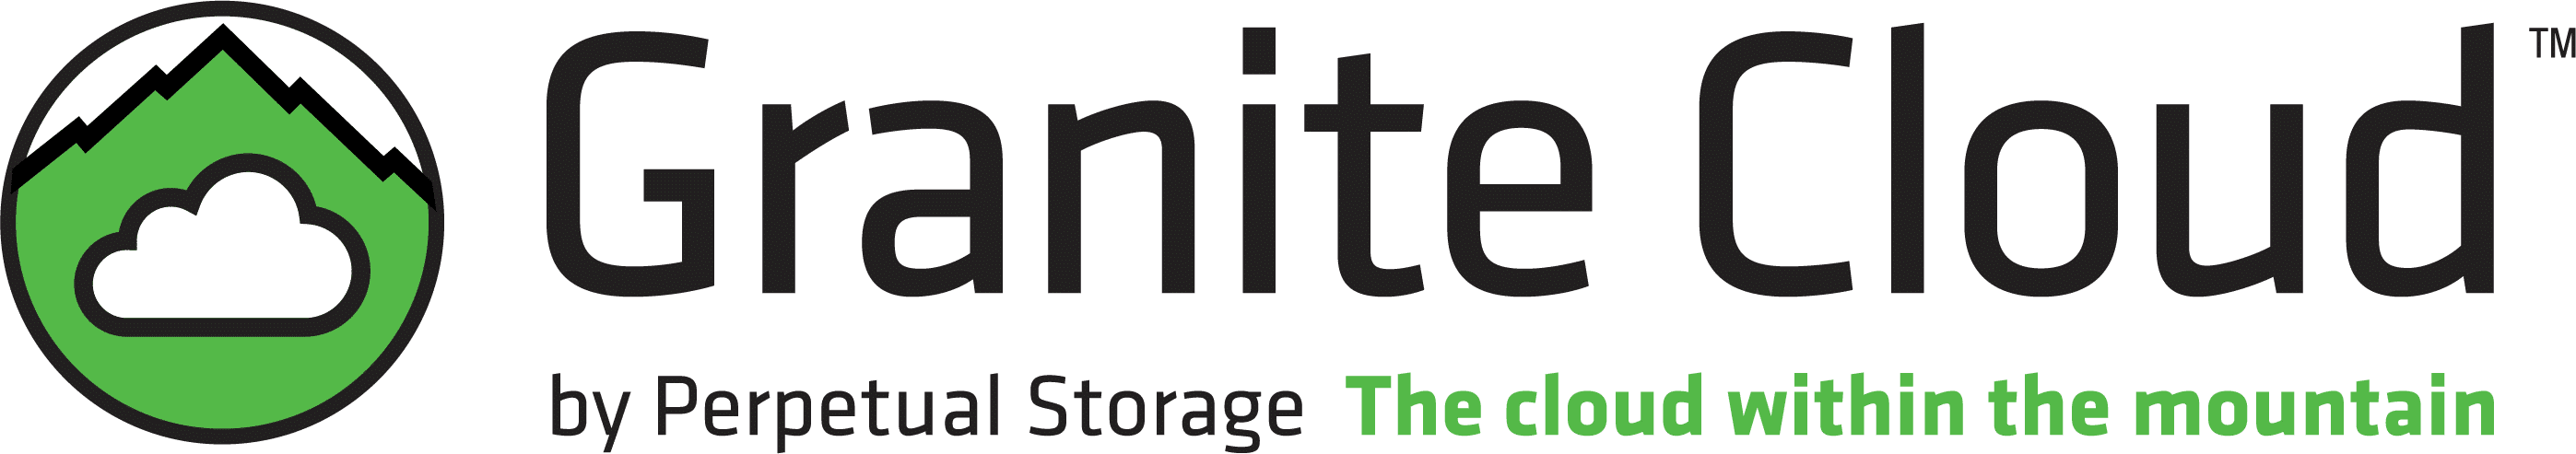 Granite Cloud by Perpetual Storage logo